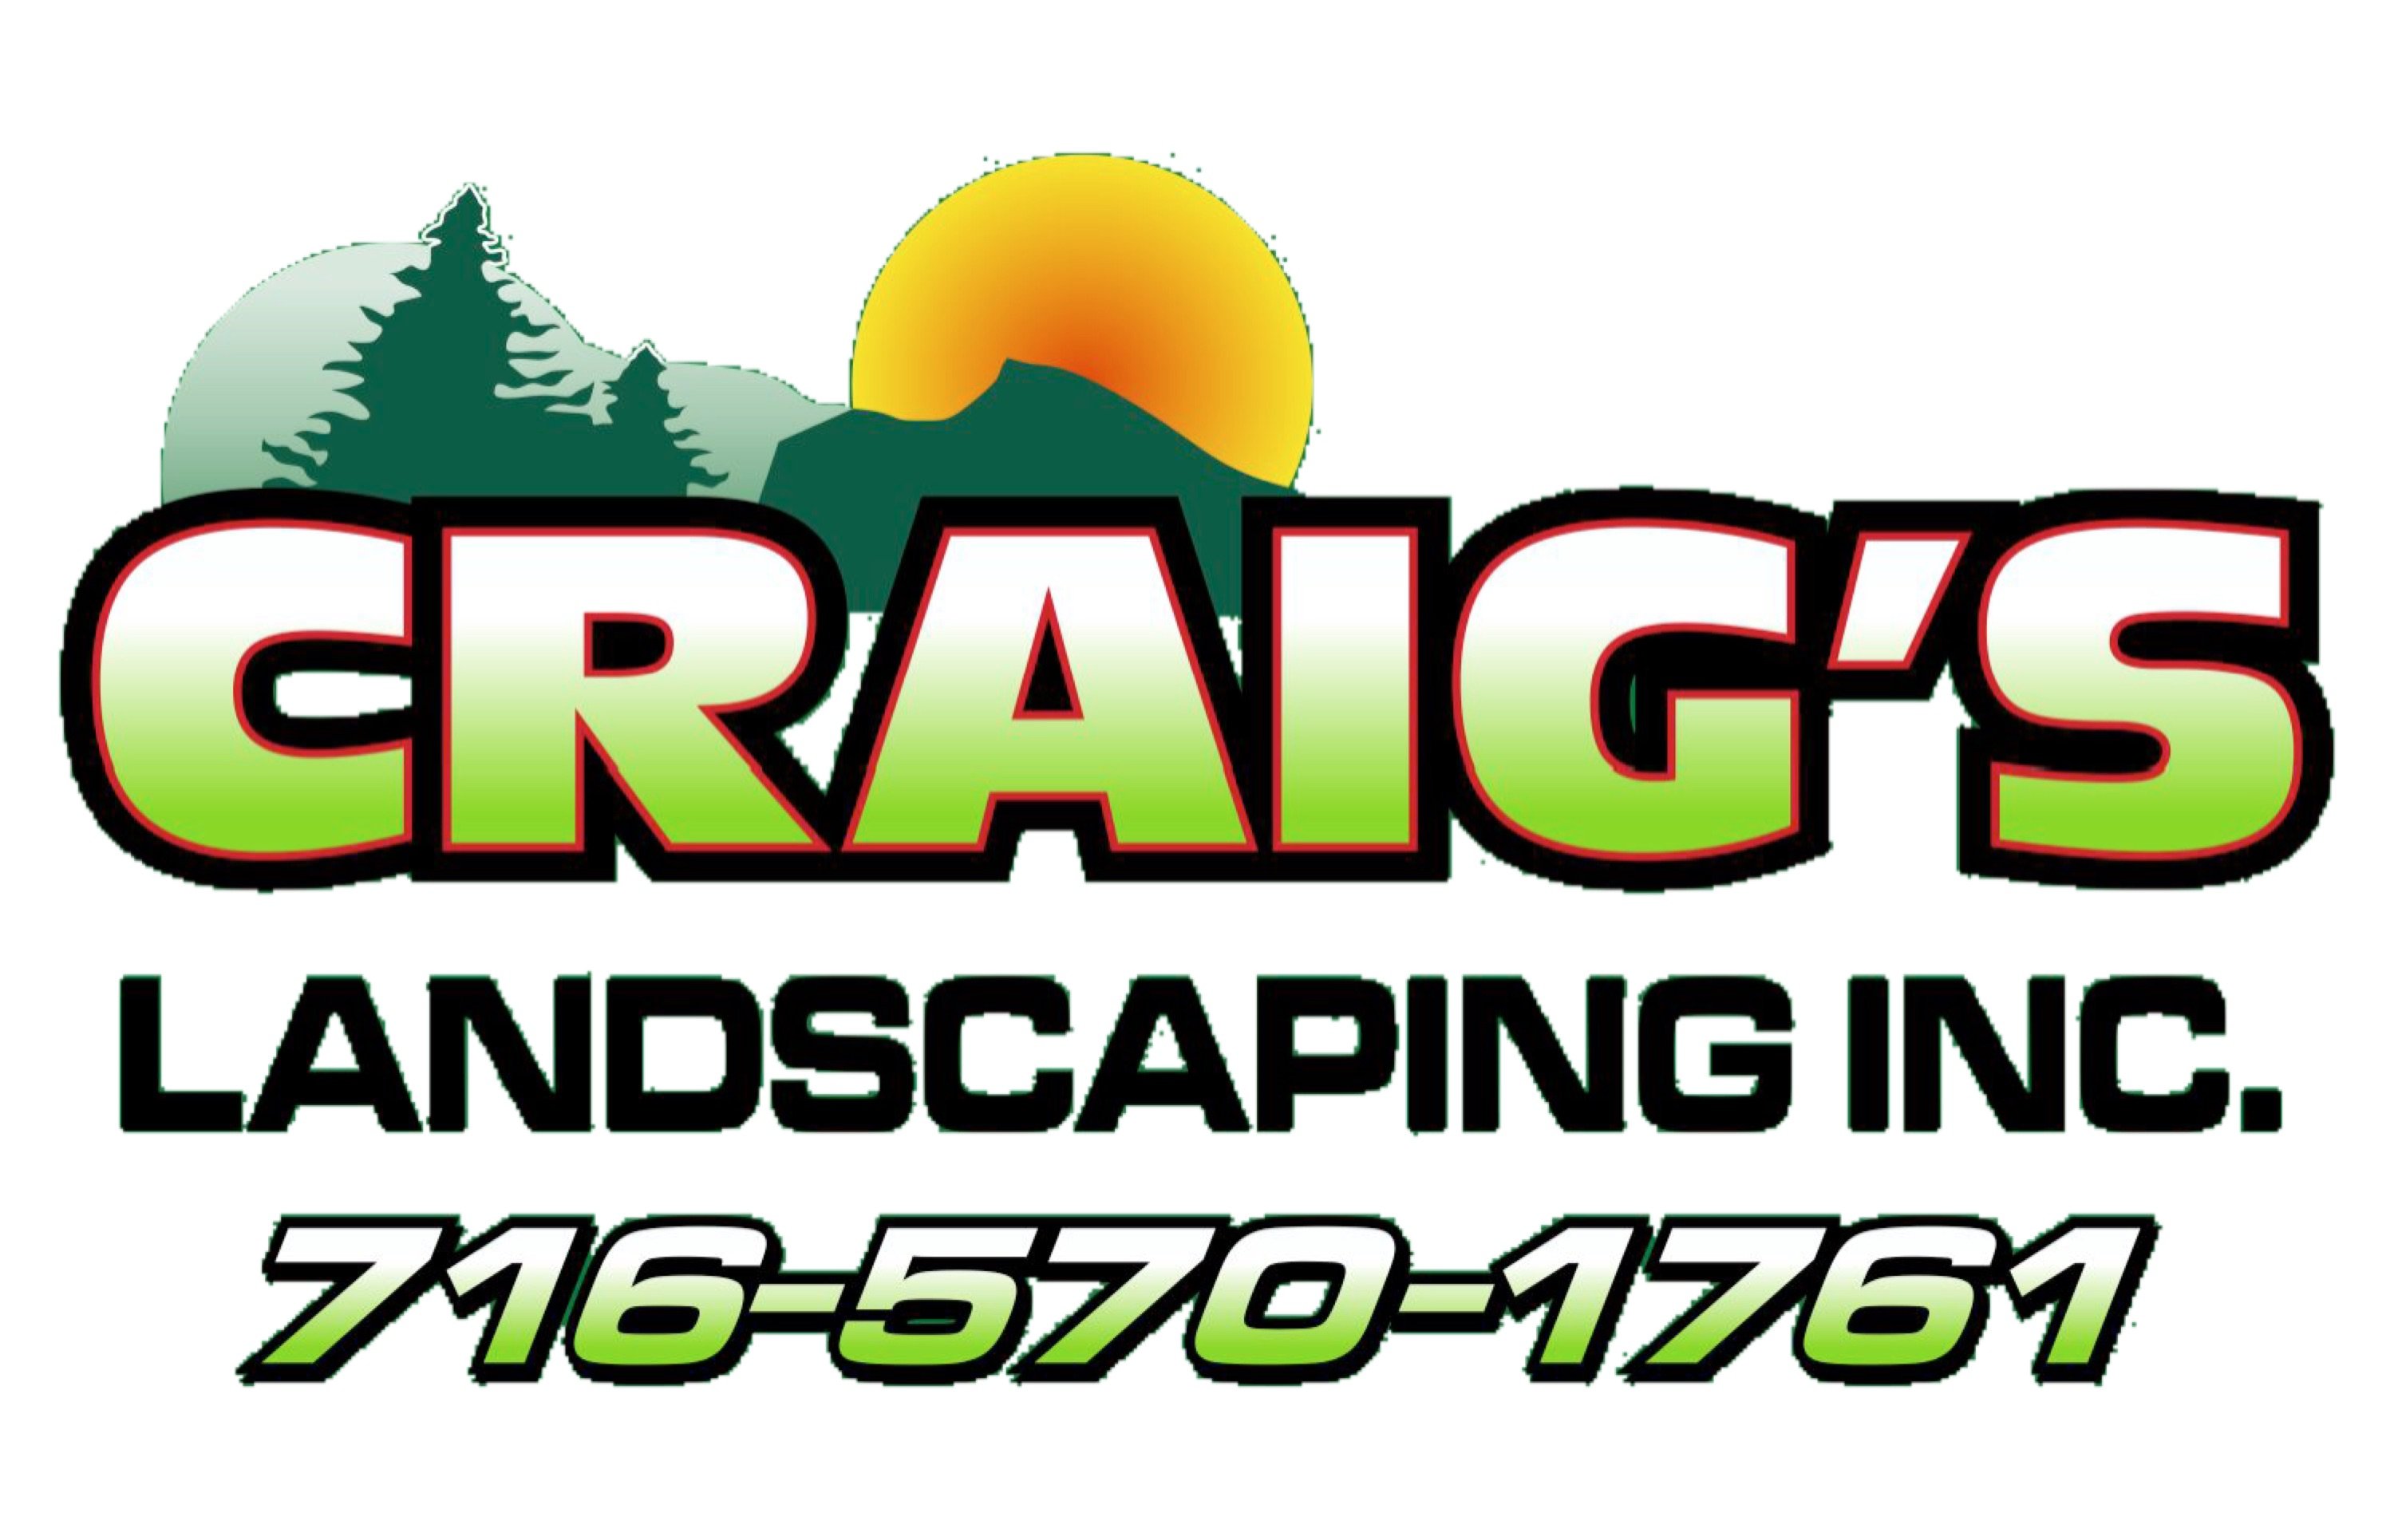 Craig's Landscaping Logo